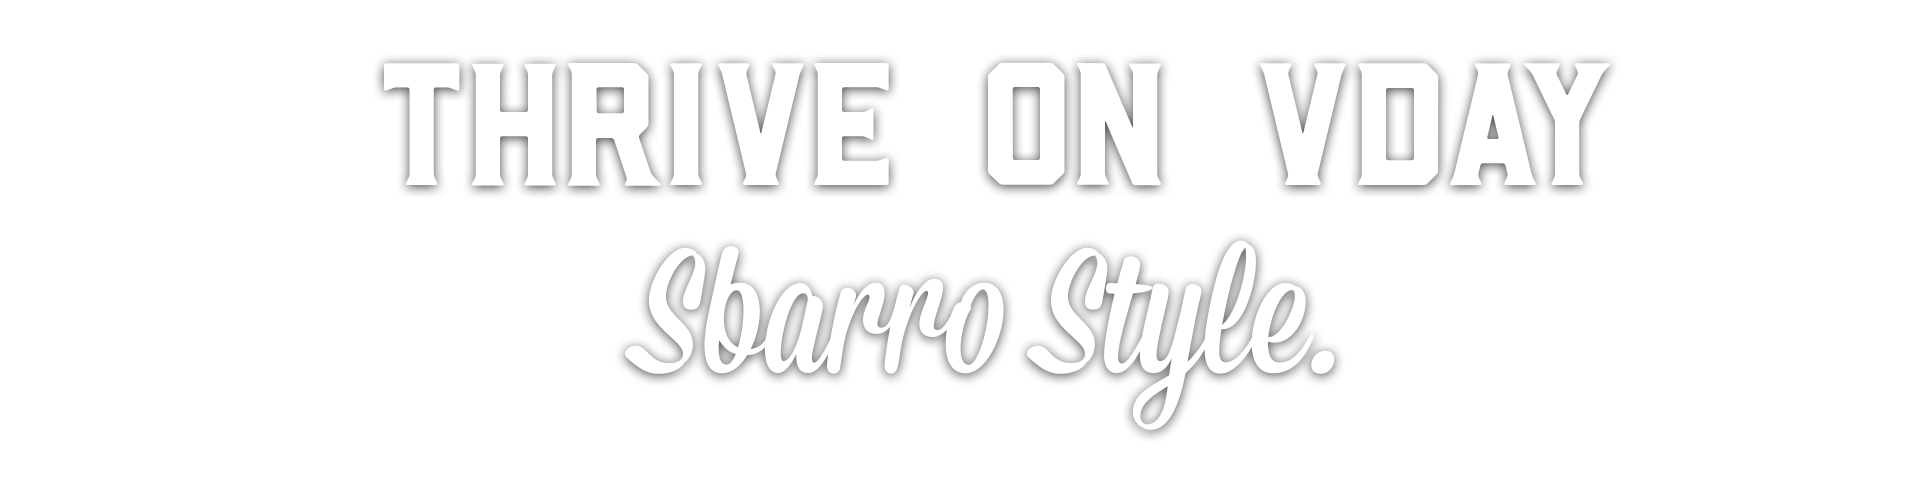 Celebrate Sbarro Style.